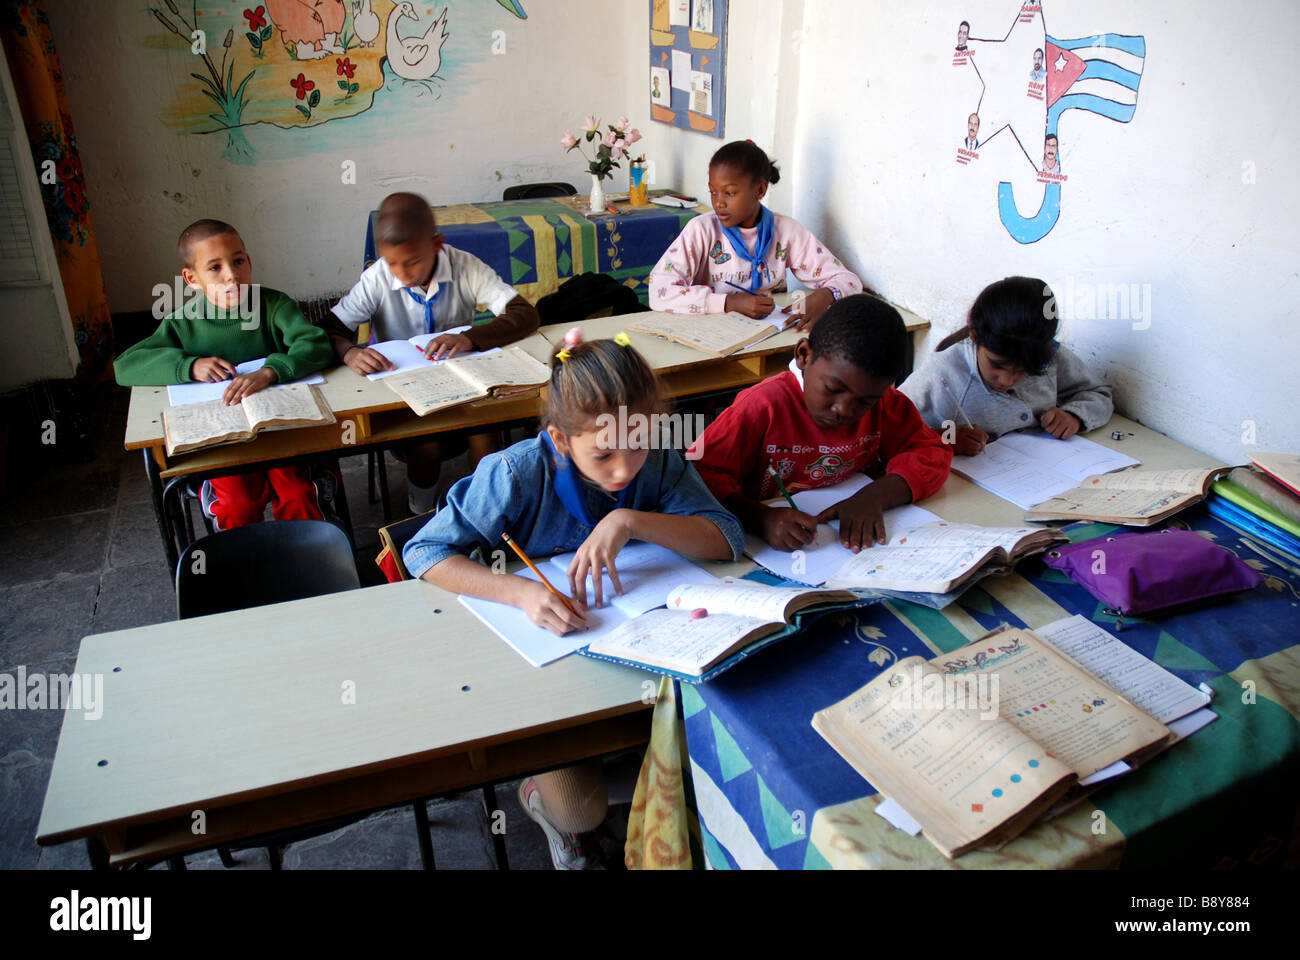 Elementary school class working in classroom Trinidad Cuba Stock Photo